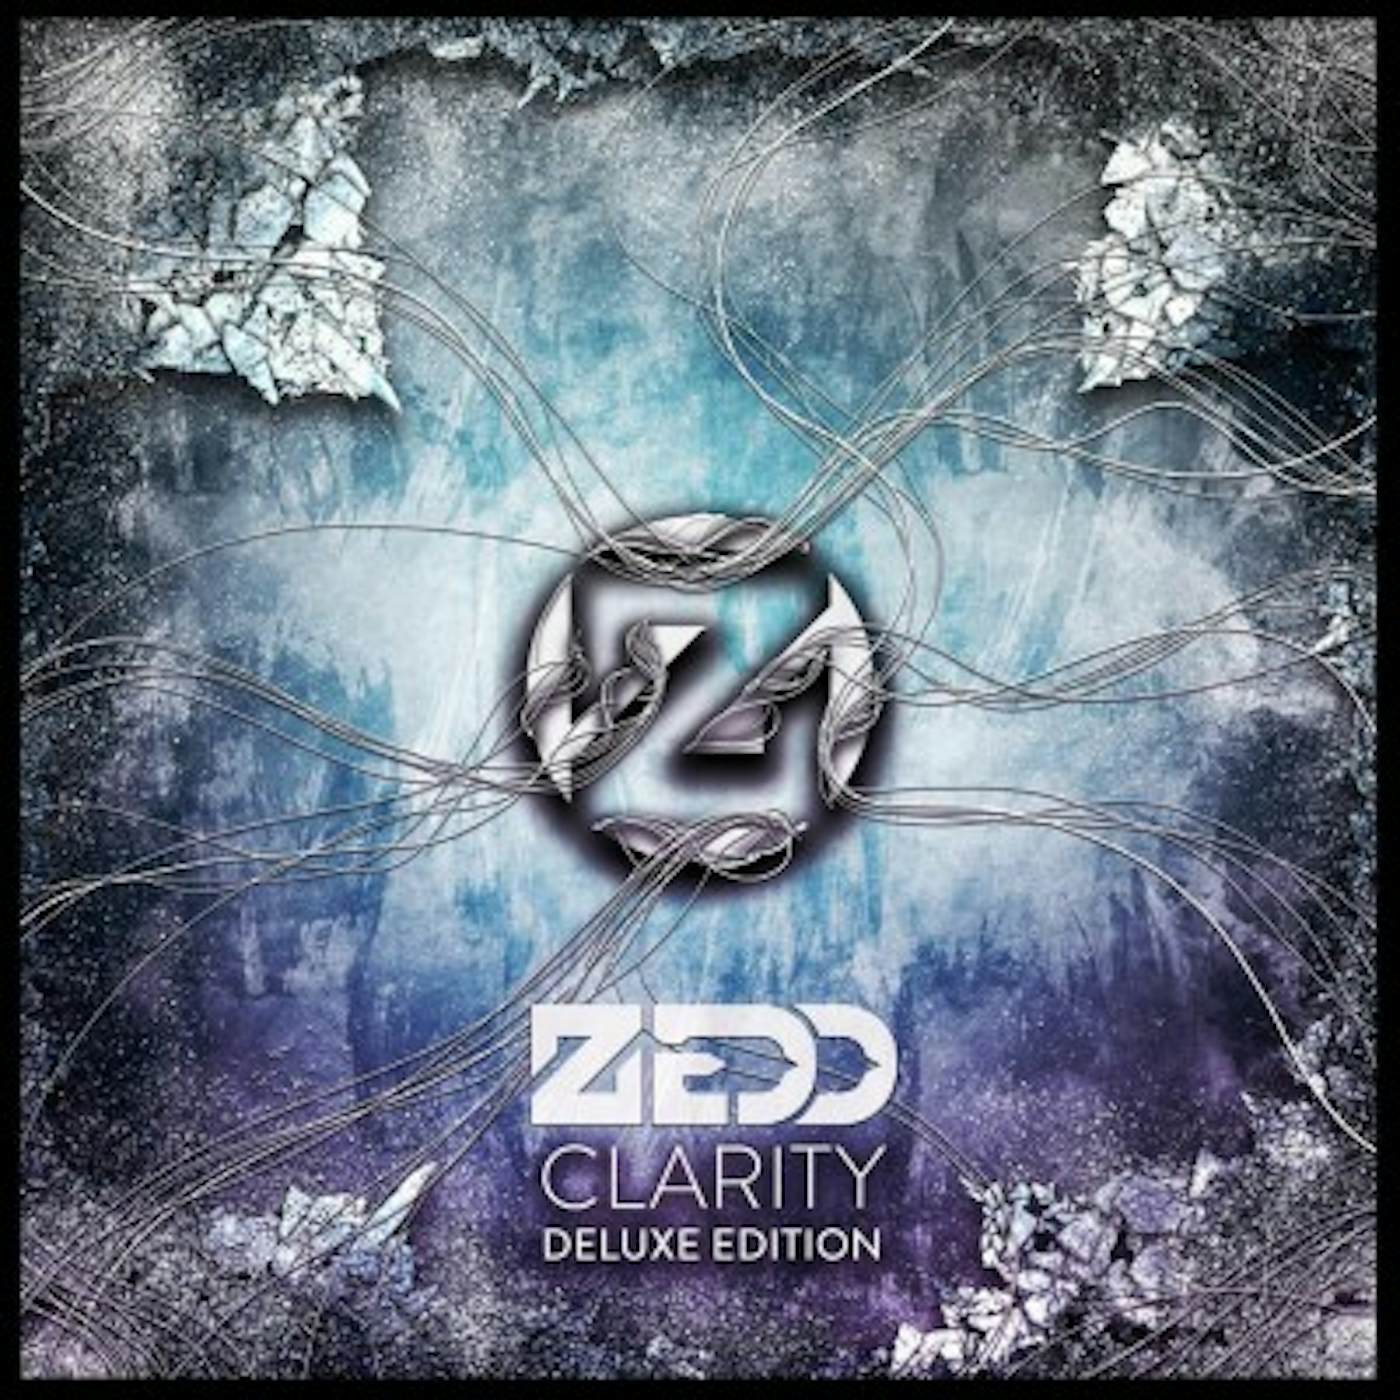 Zedd Clarity Deluxe Edition (2 LP) Vinyl Record